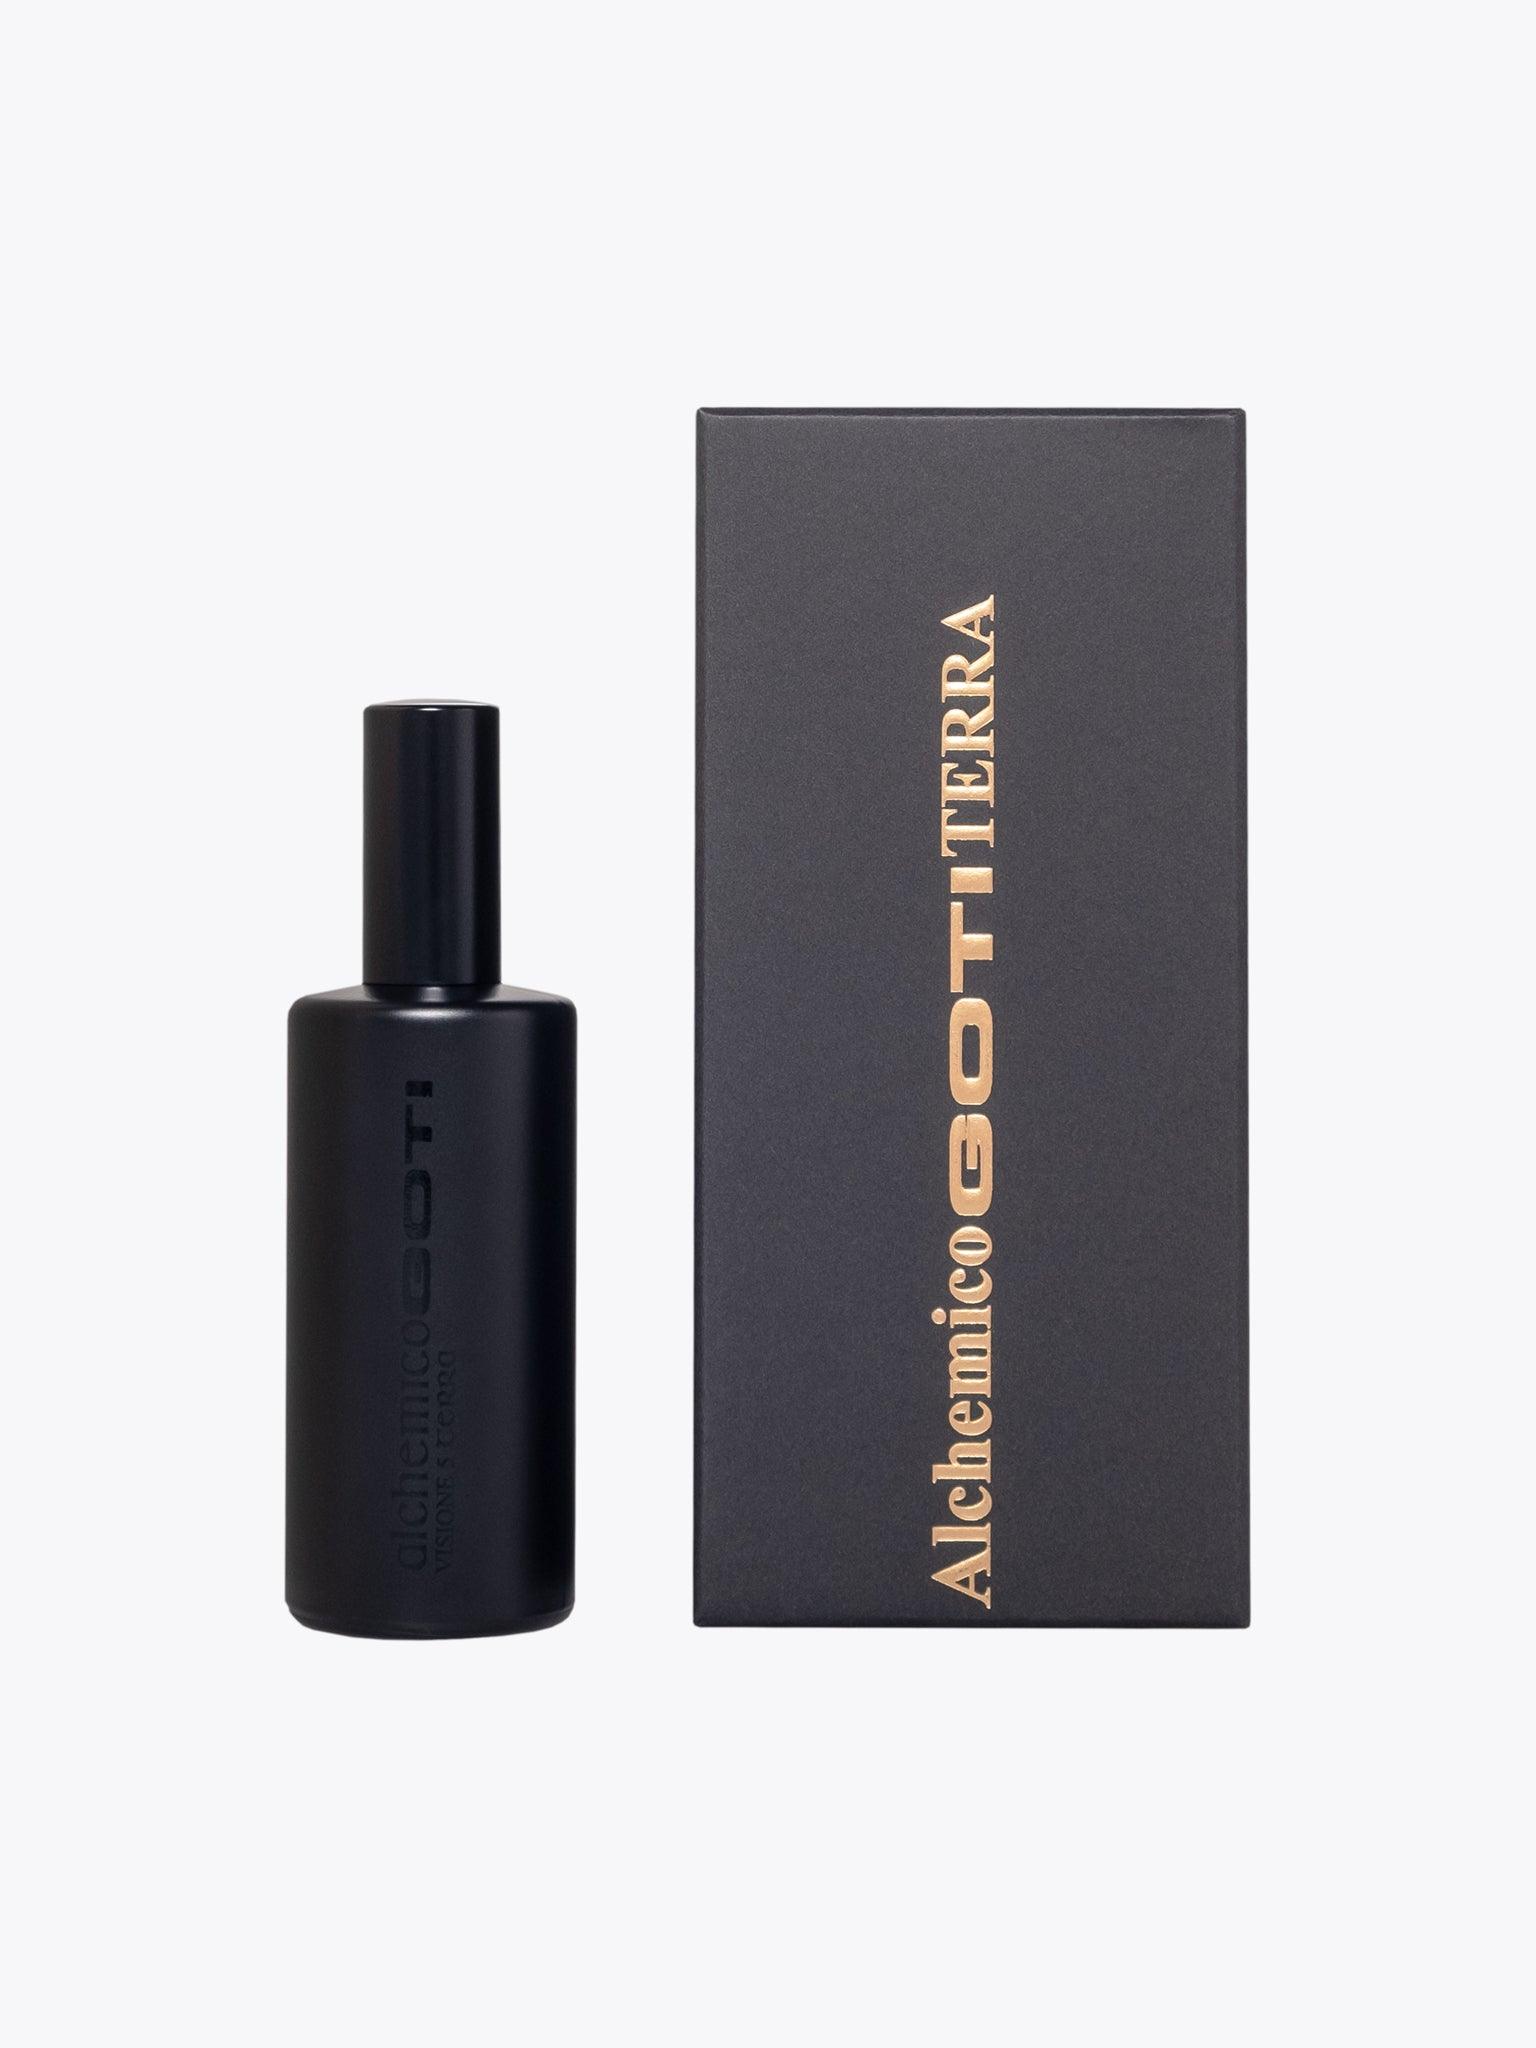 GOTI Terra Alchemico Visione 5 Perfume 100 ml